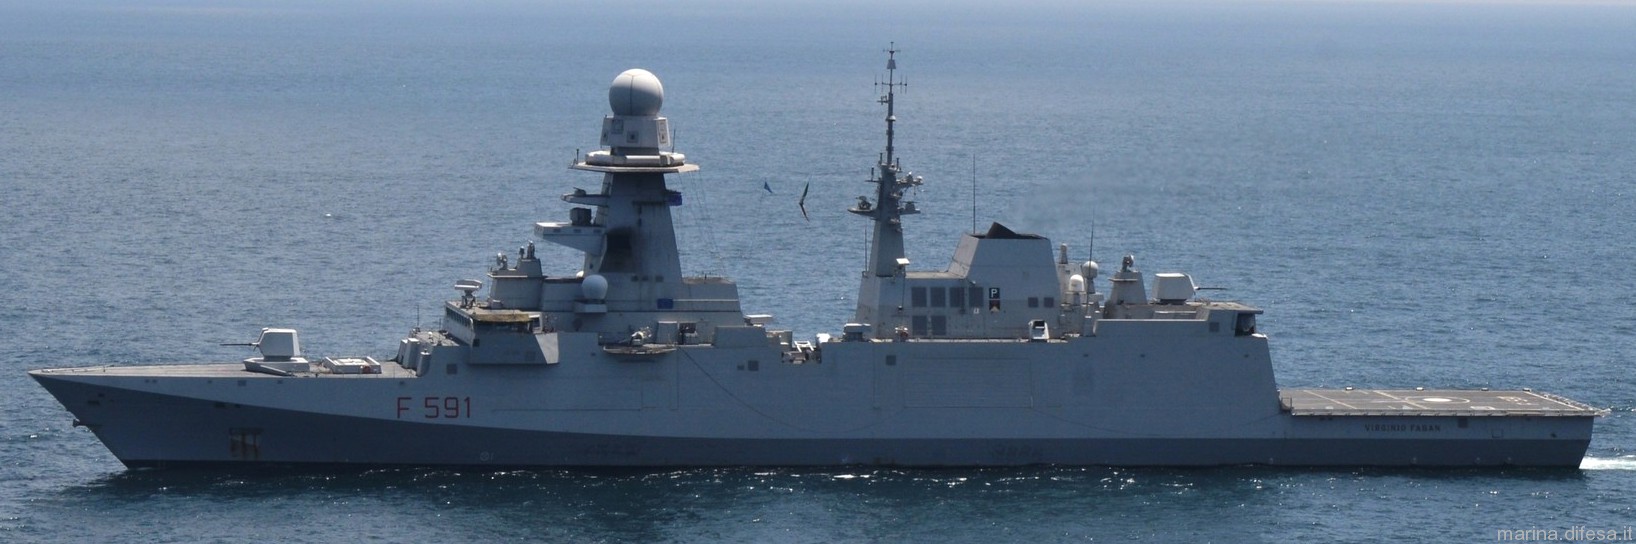 f-591 virginio fasan its nave bergamini fremm class guided missile frigate italian navy marina militare 26